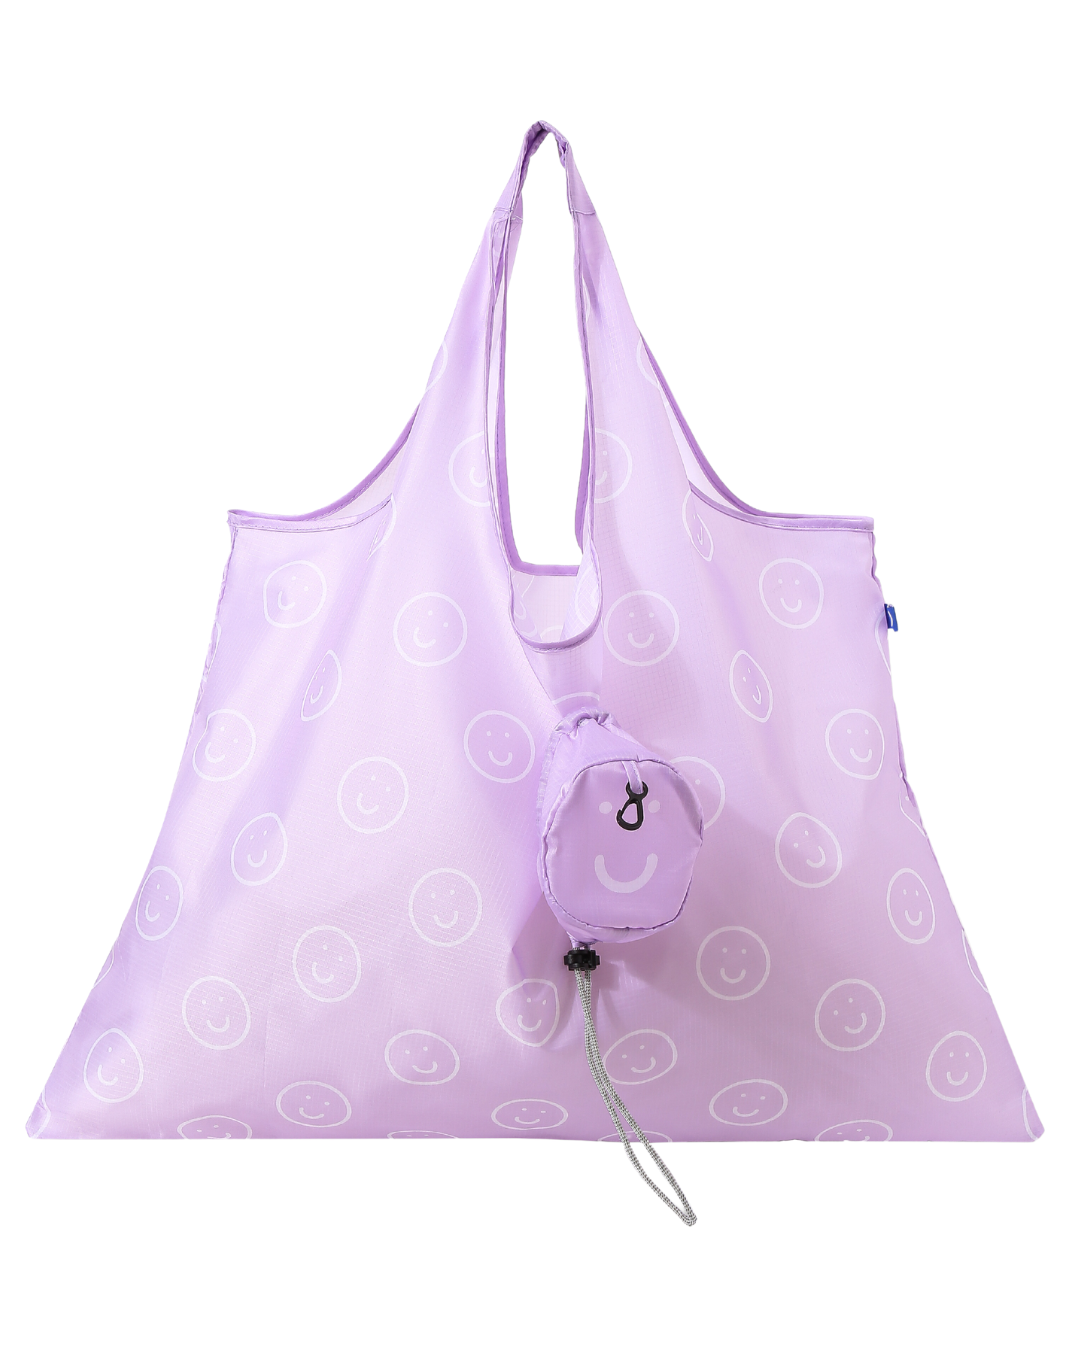 Signature Smile SwiftStash Big Reusable Bag in Lilac